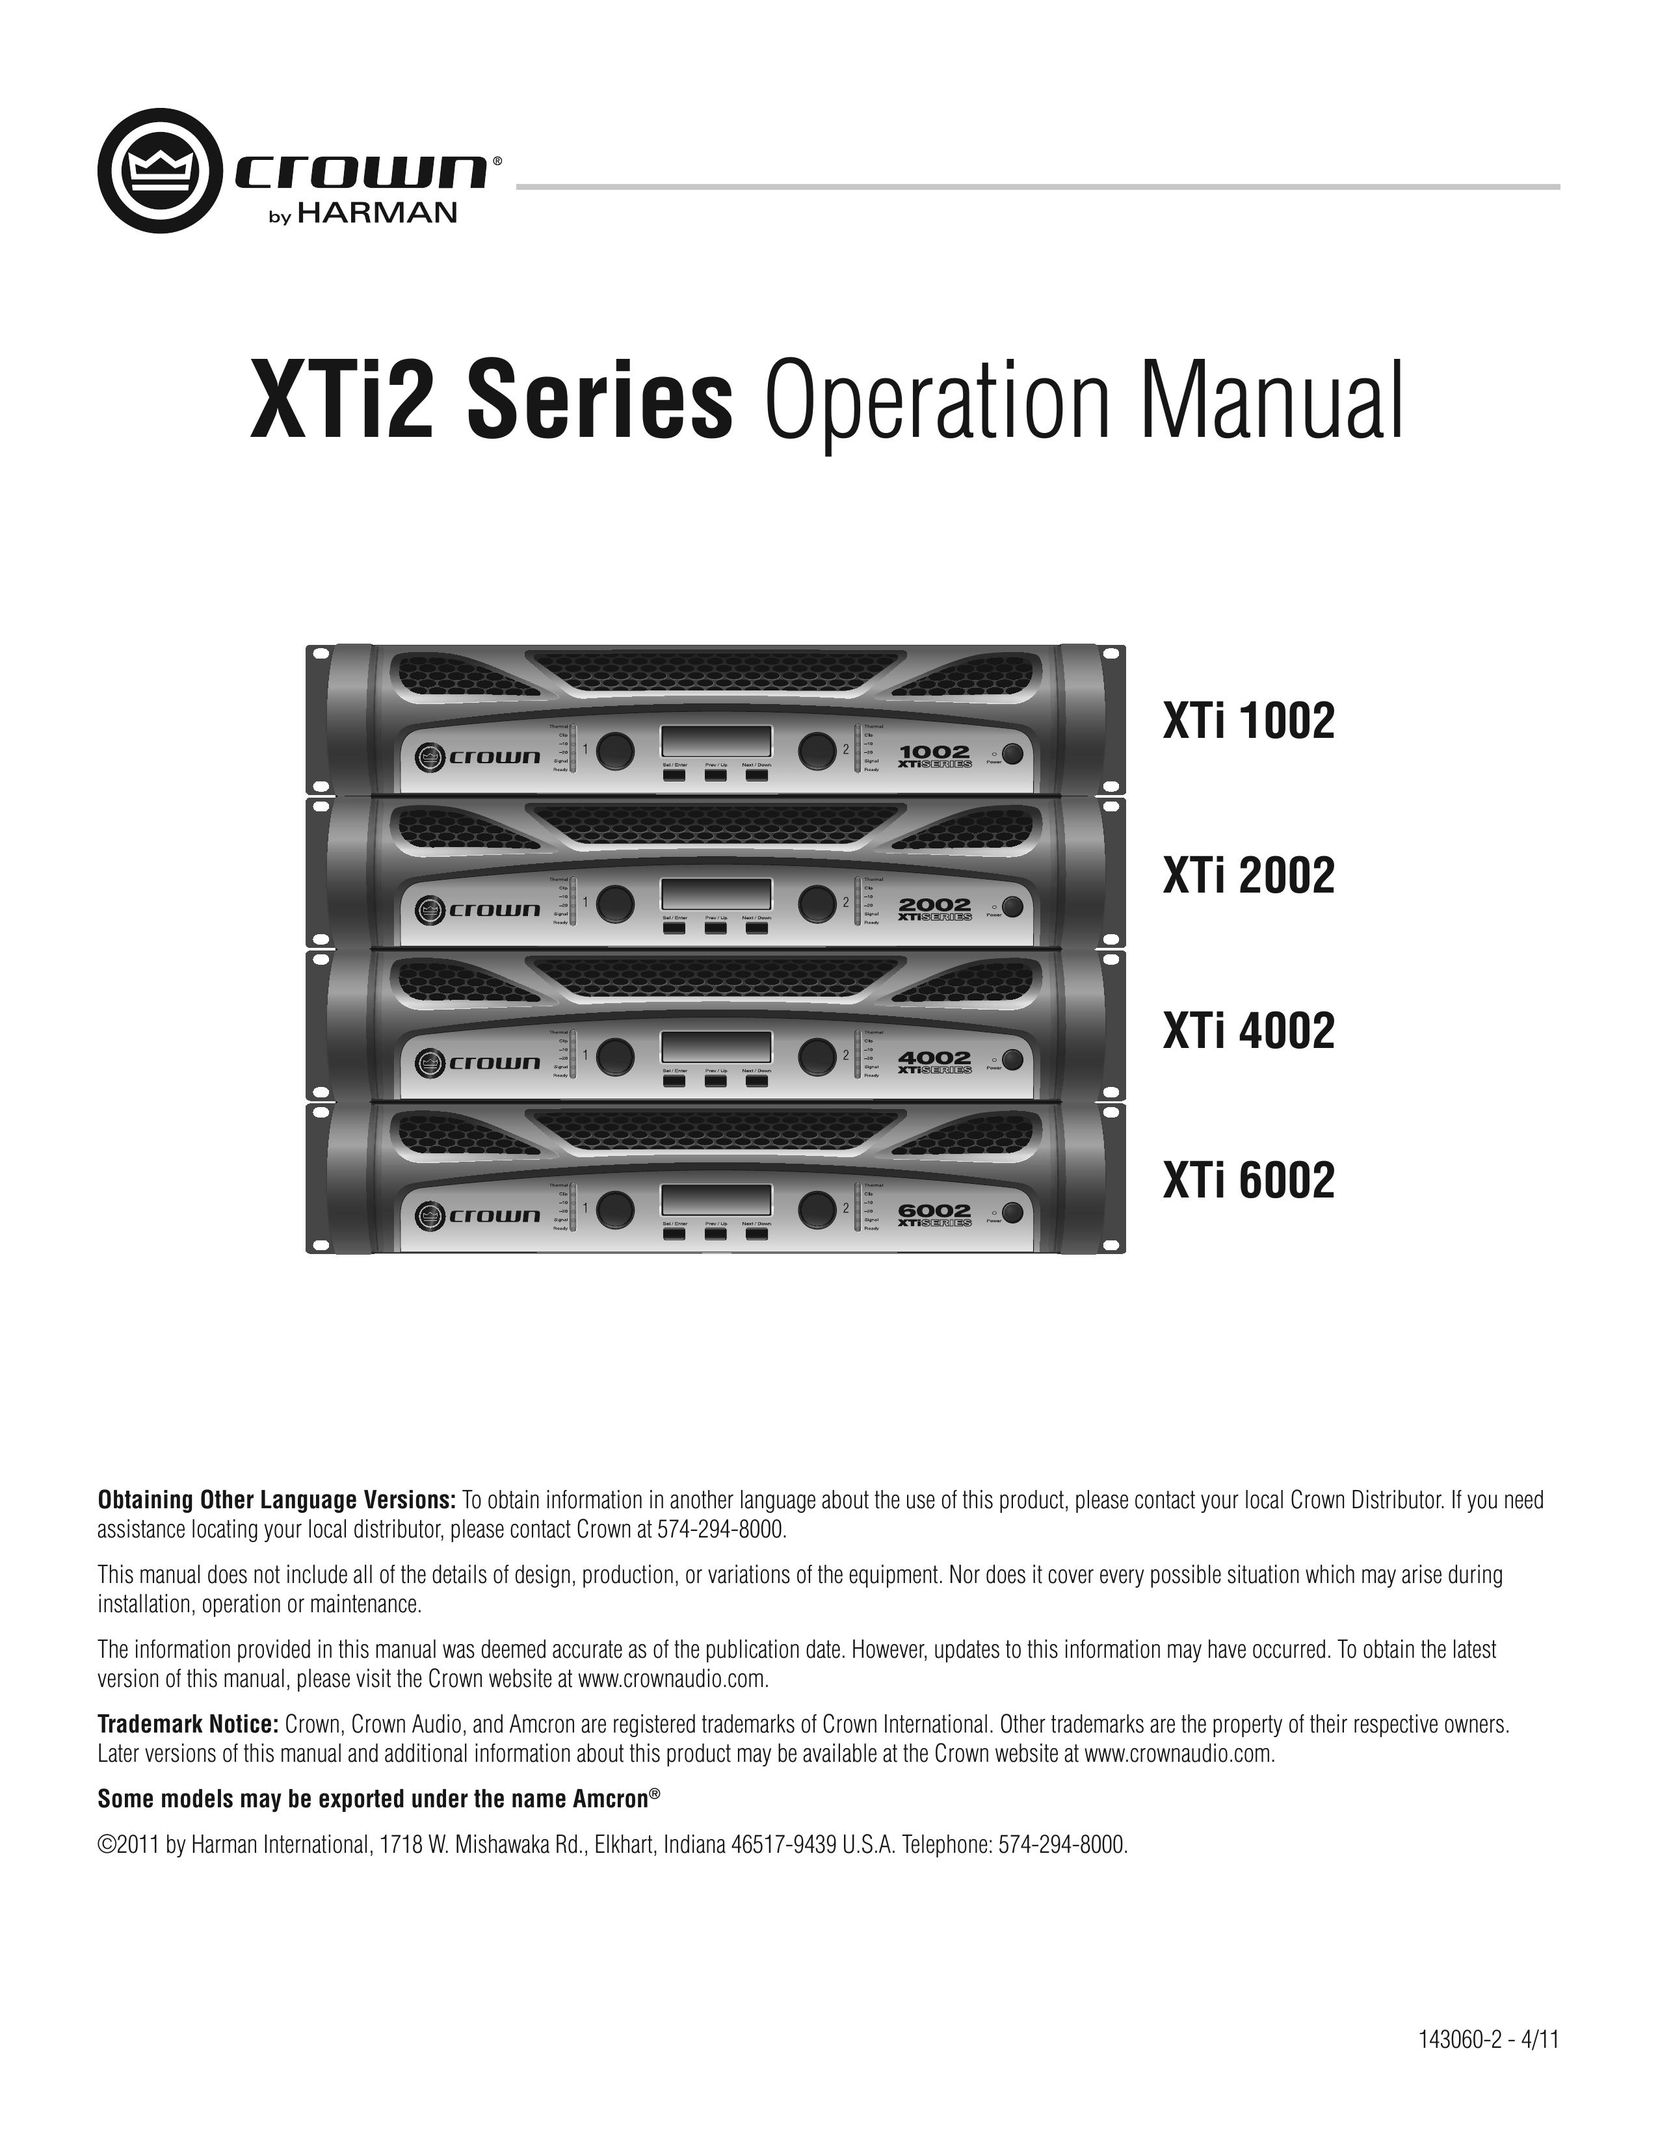 Crown XTI 4002 Car Amplifier User Manual